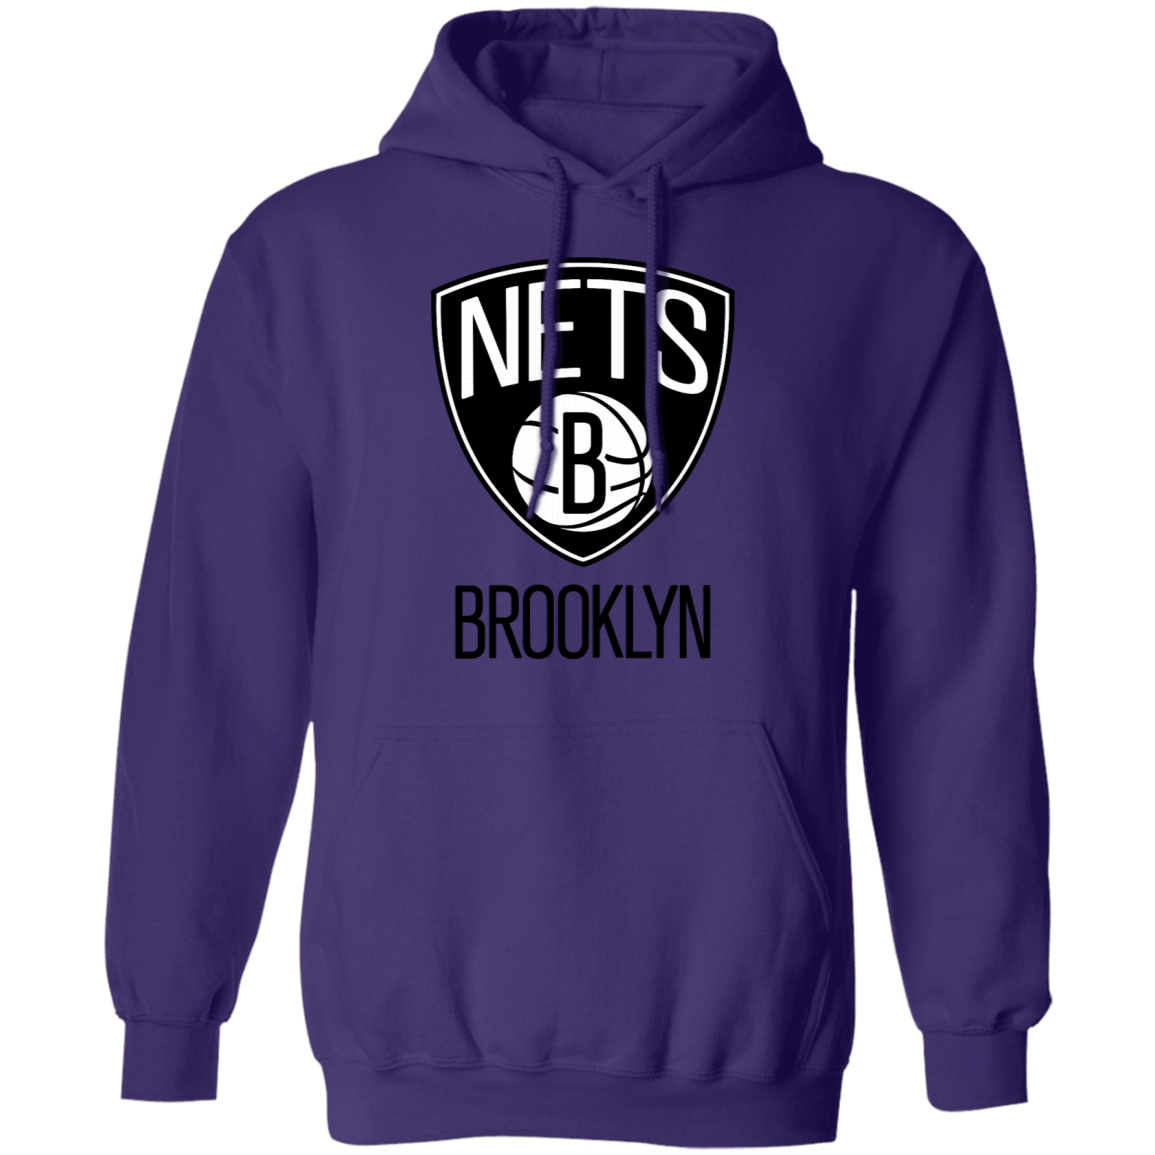 Vintage Style Brooklyn Nets Sweatshirt, Nets NBA Basketball - Inspire Uplift